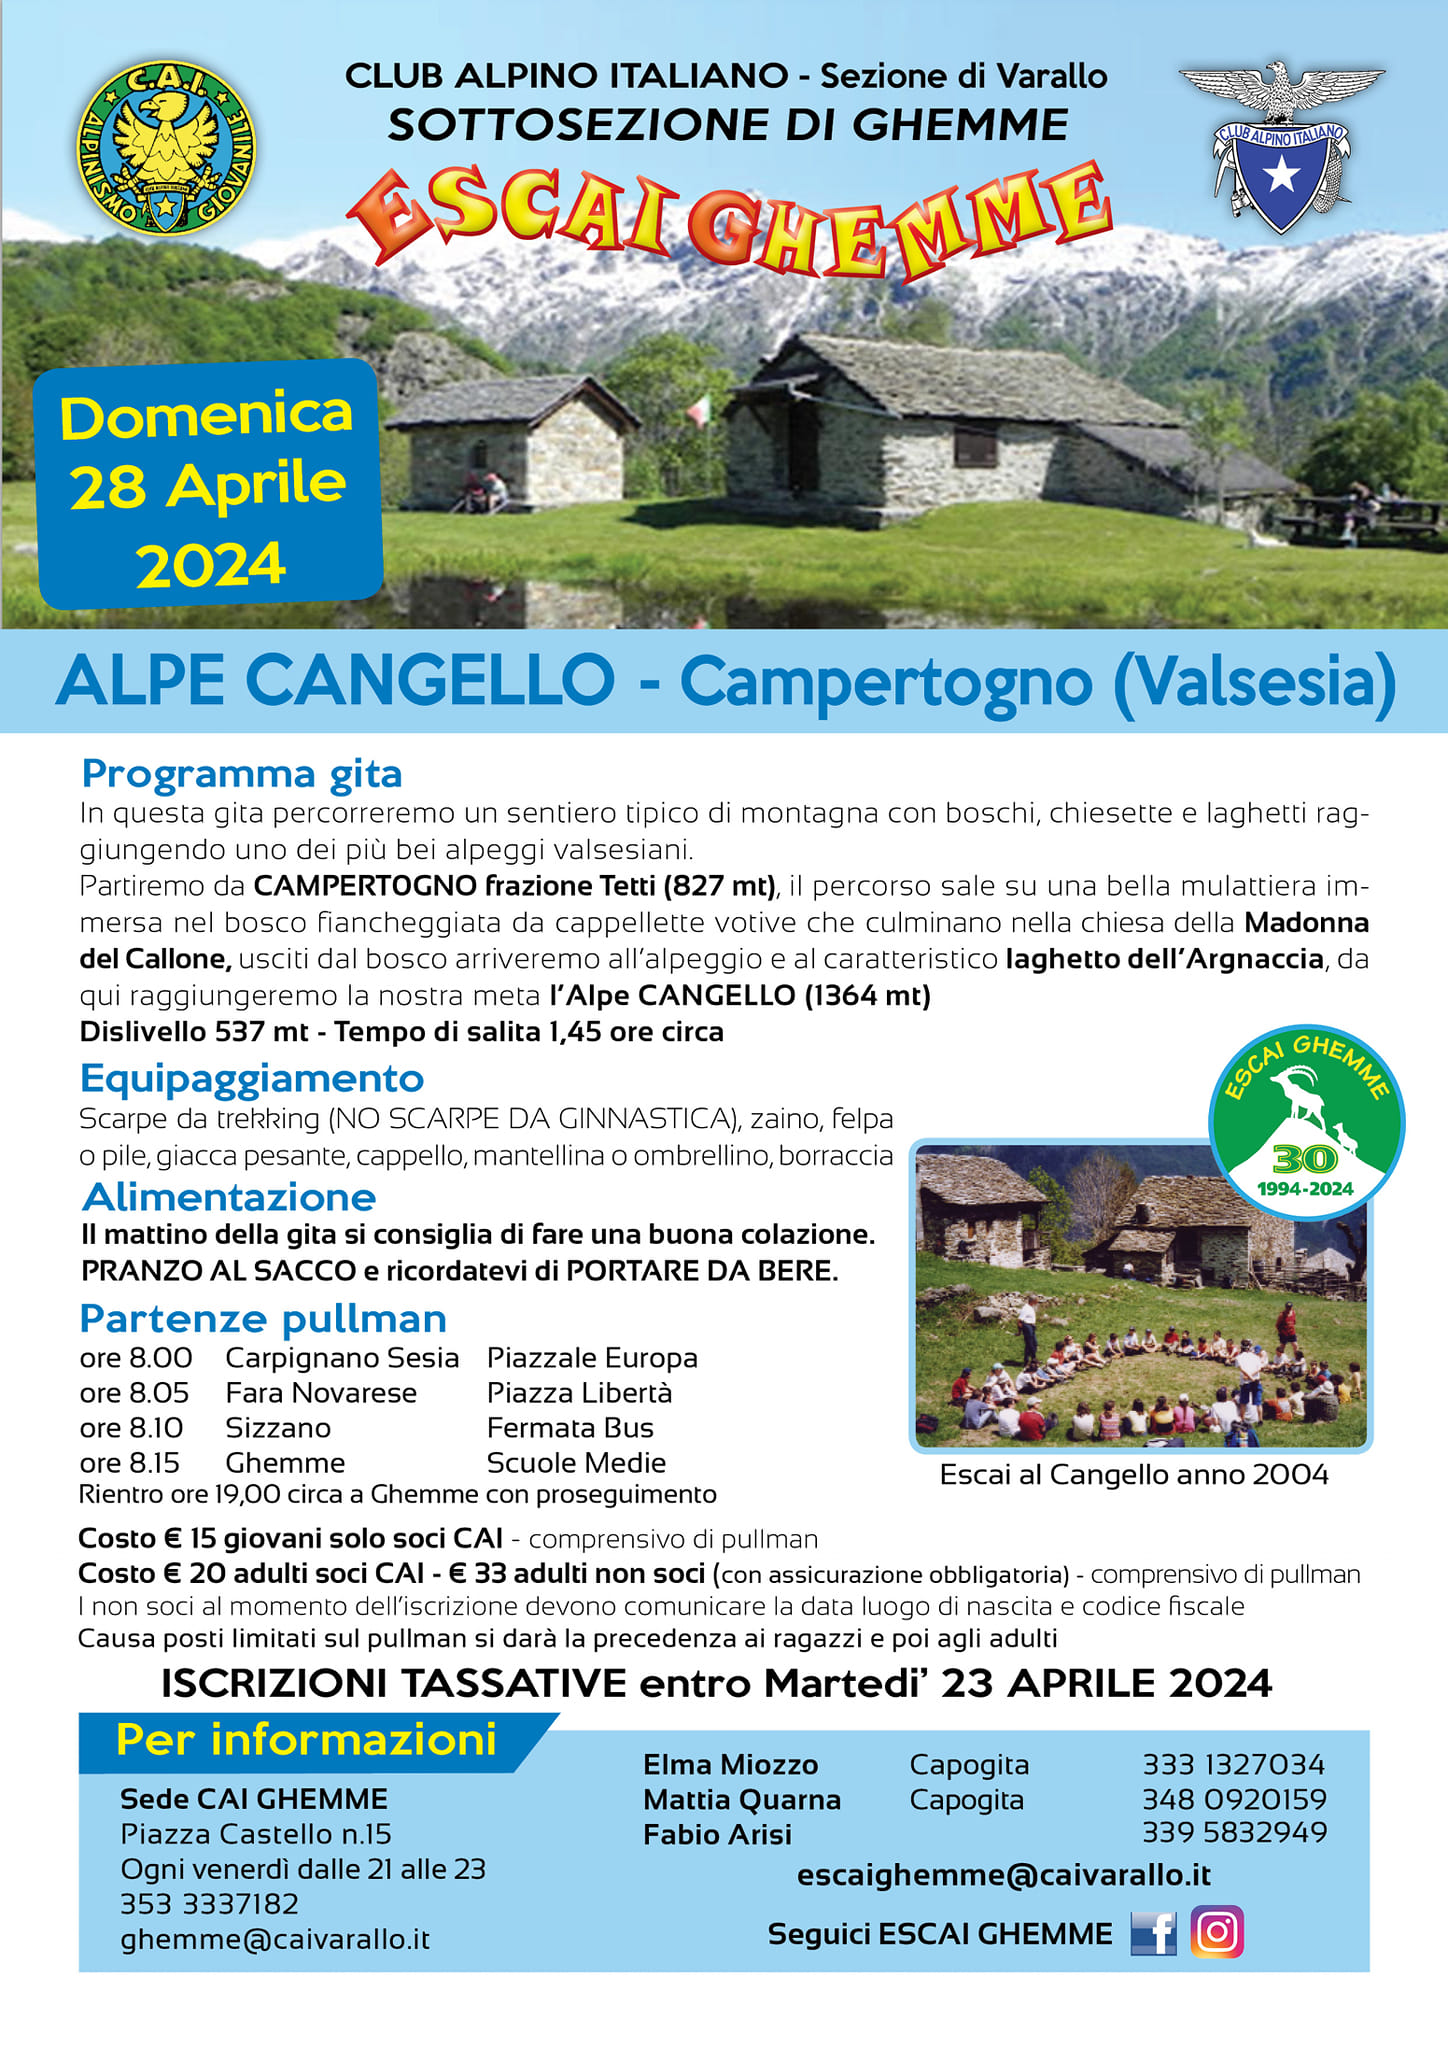 Alpe Cangello - Campertogno (Valsesia)